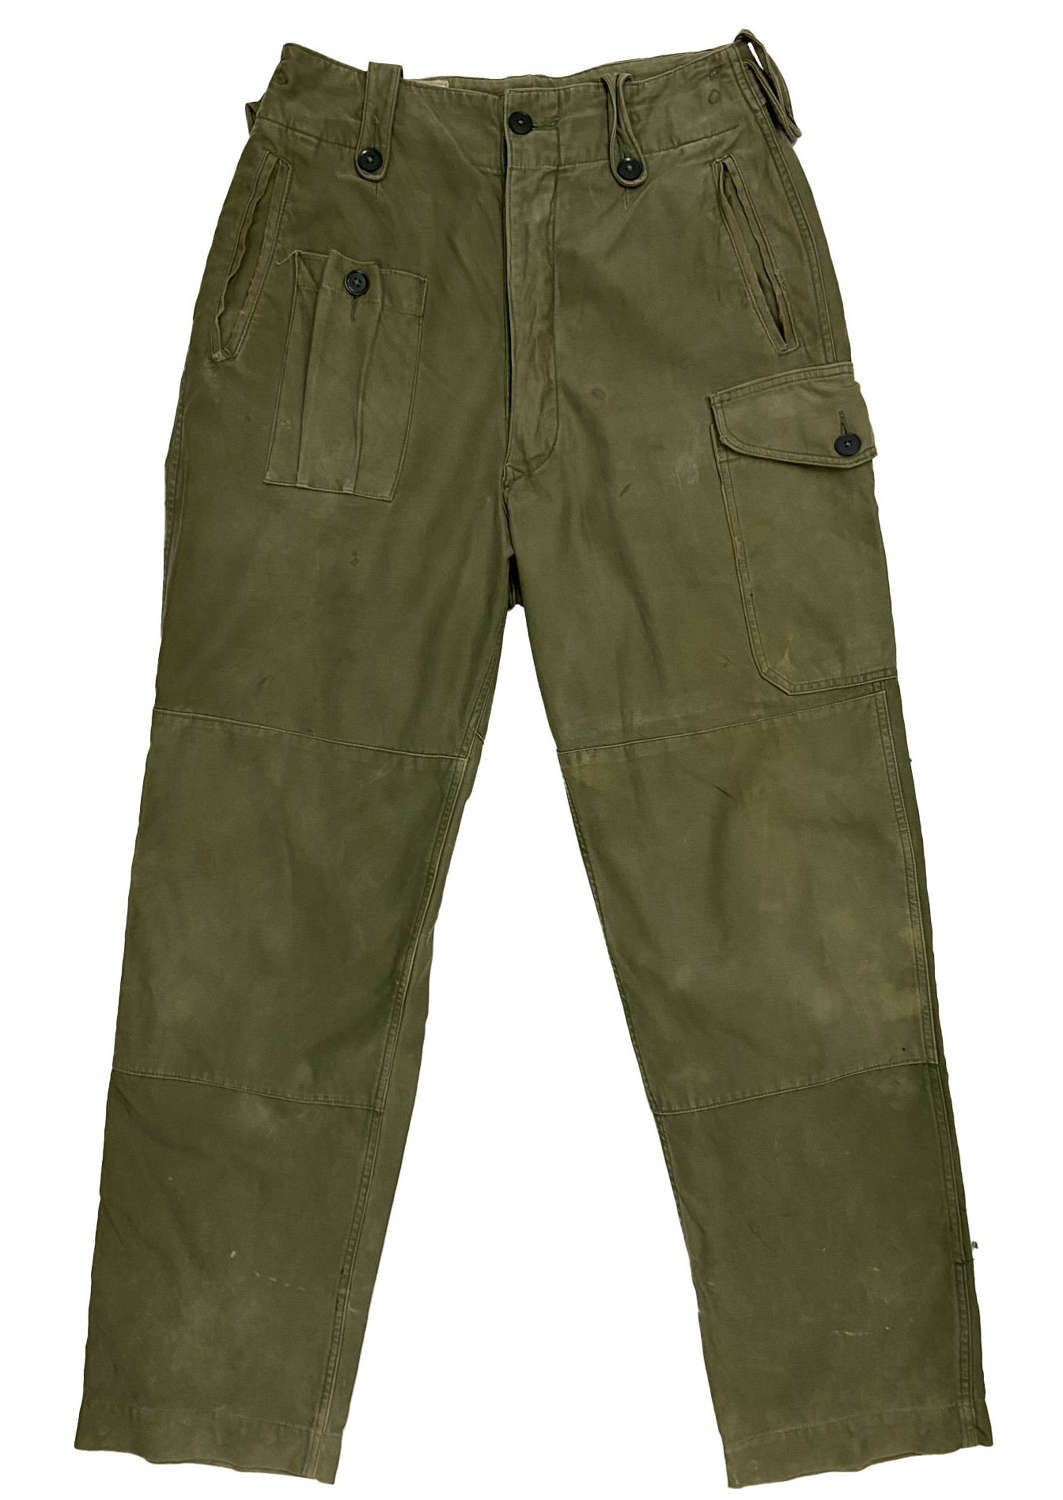 Original late 1960s British Army 1960 Pattern Combat Trousers - Size 4